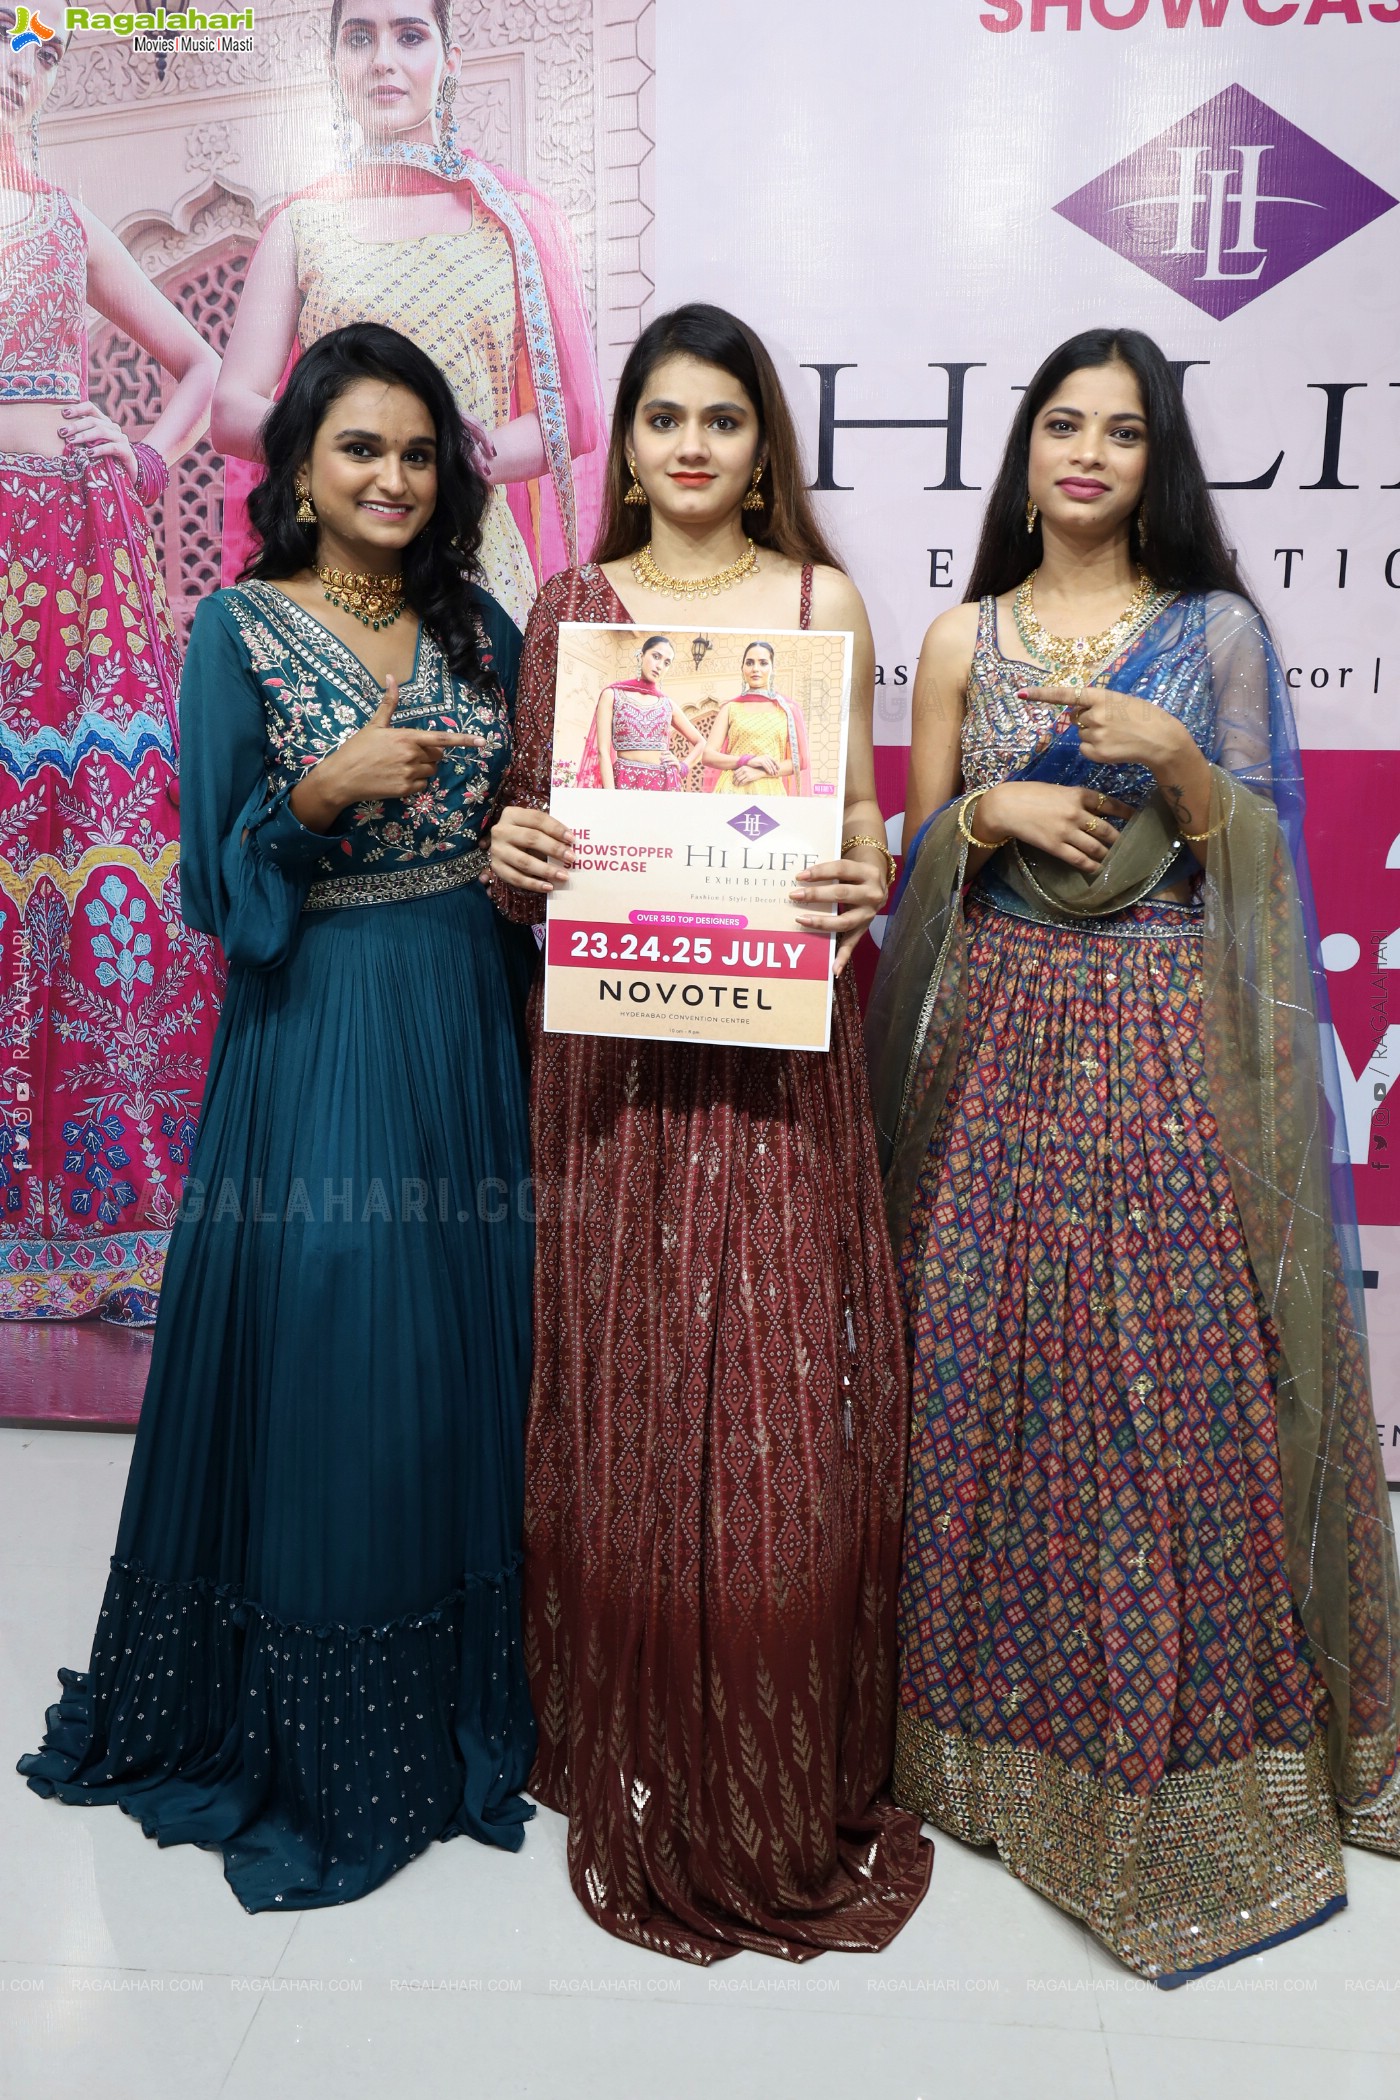 Hi Life Exhibition Hyderabad July 2023 Fashion Showcase Event